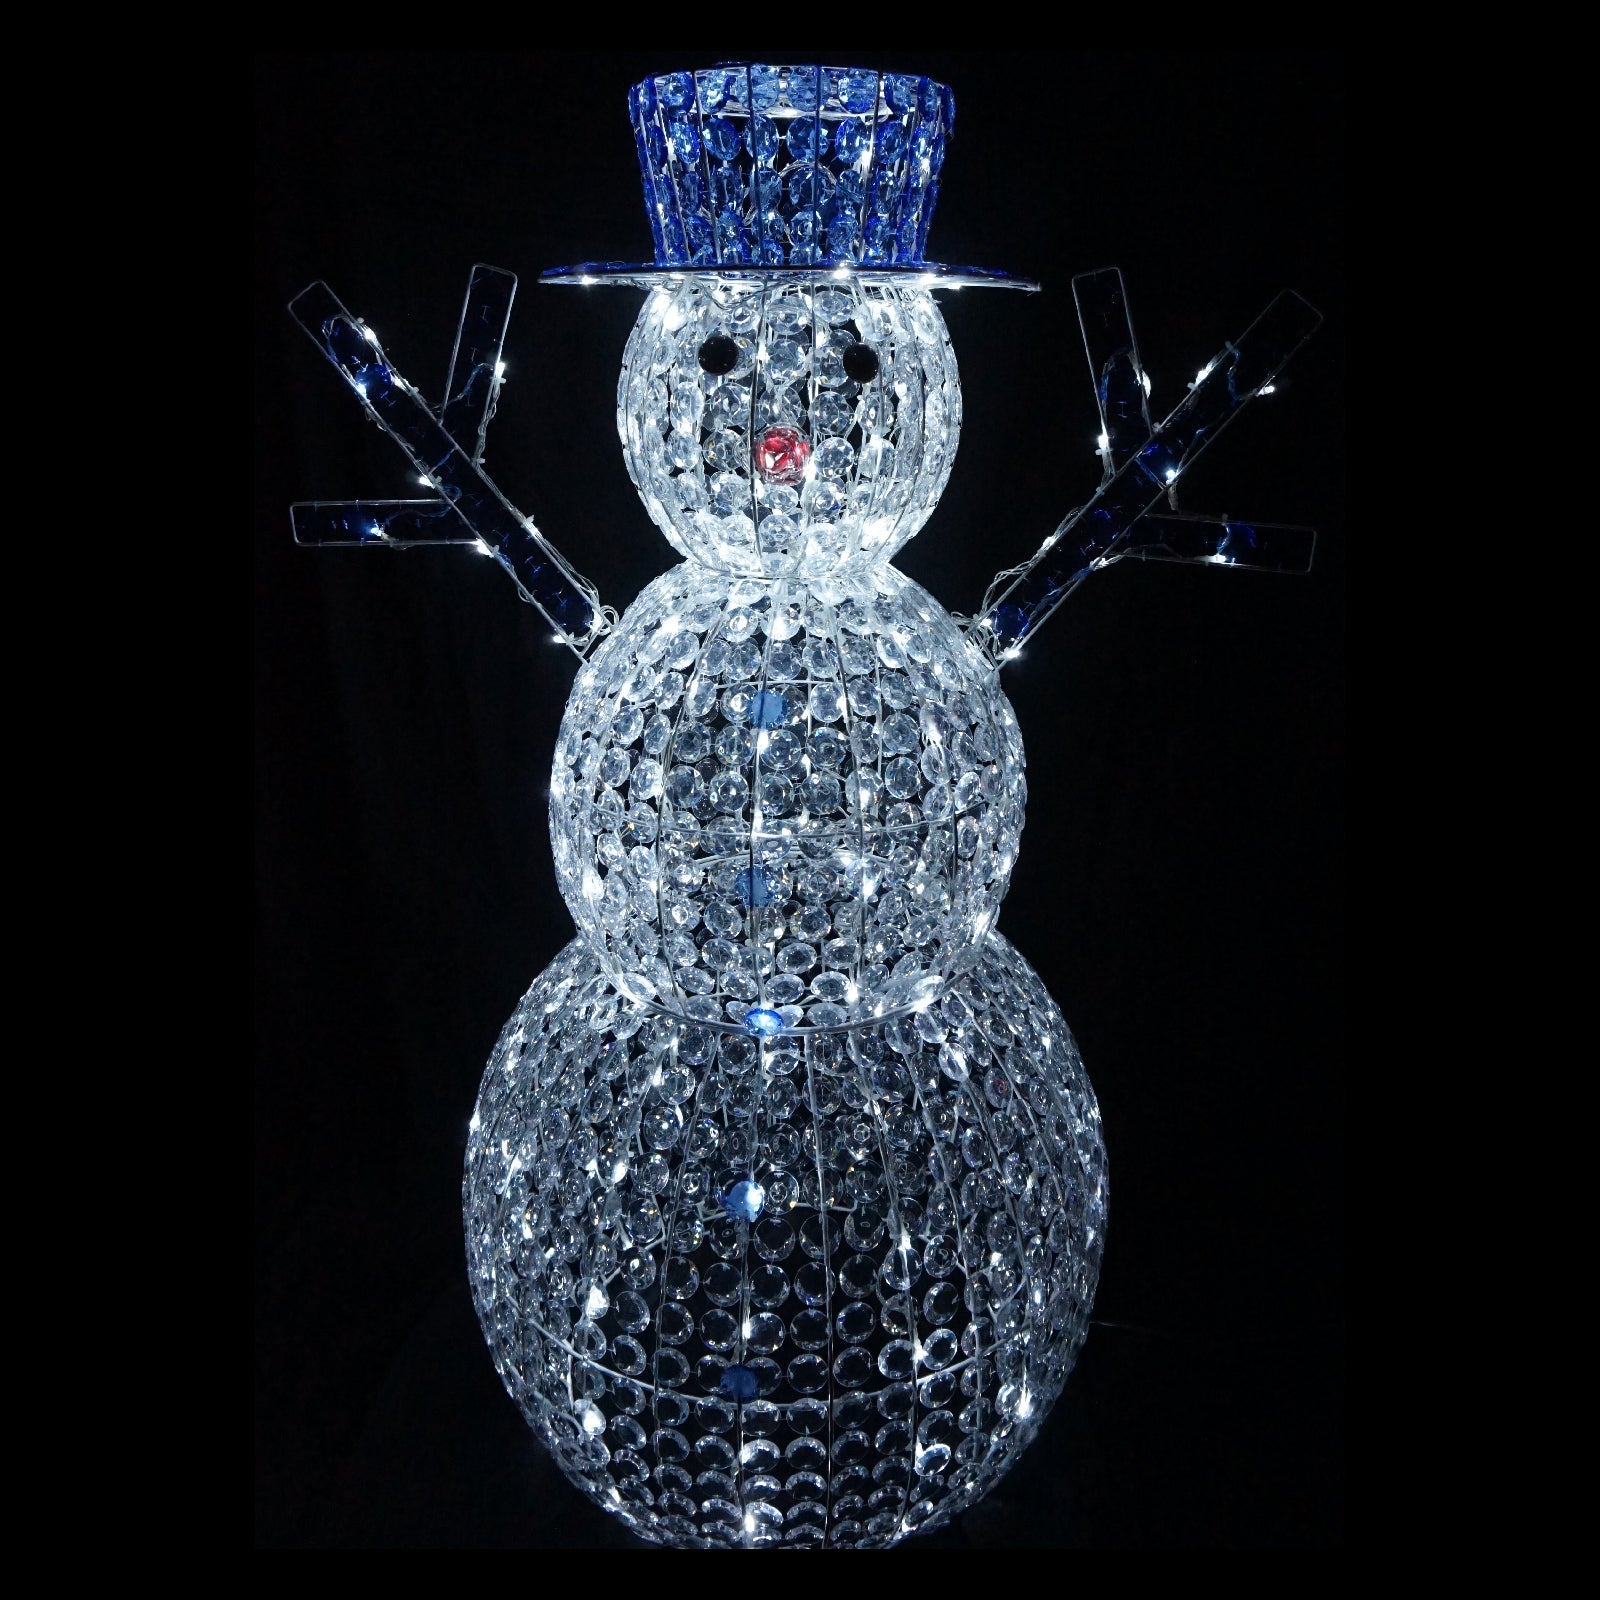 3D Crystal Snowman 50, 80, 120cm LED Display Indoor/Outdoor